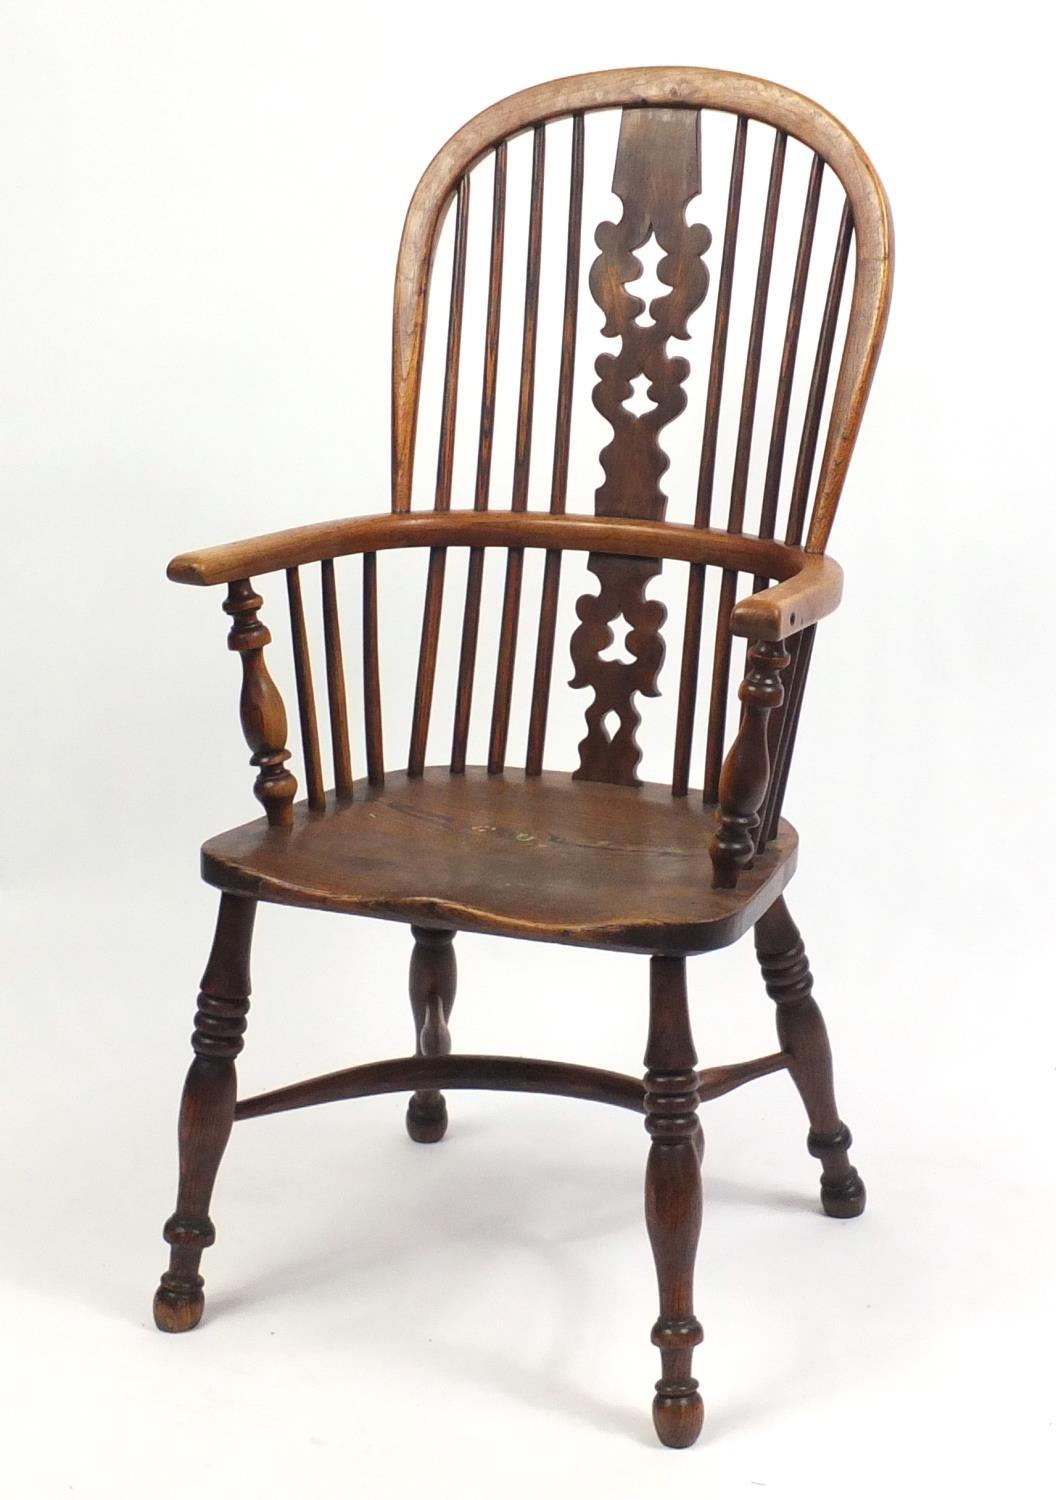 Victorian elm Windsor chair with crinoline stretcher, 106cm high